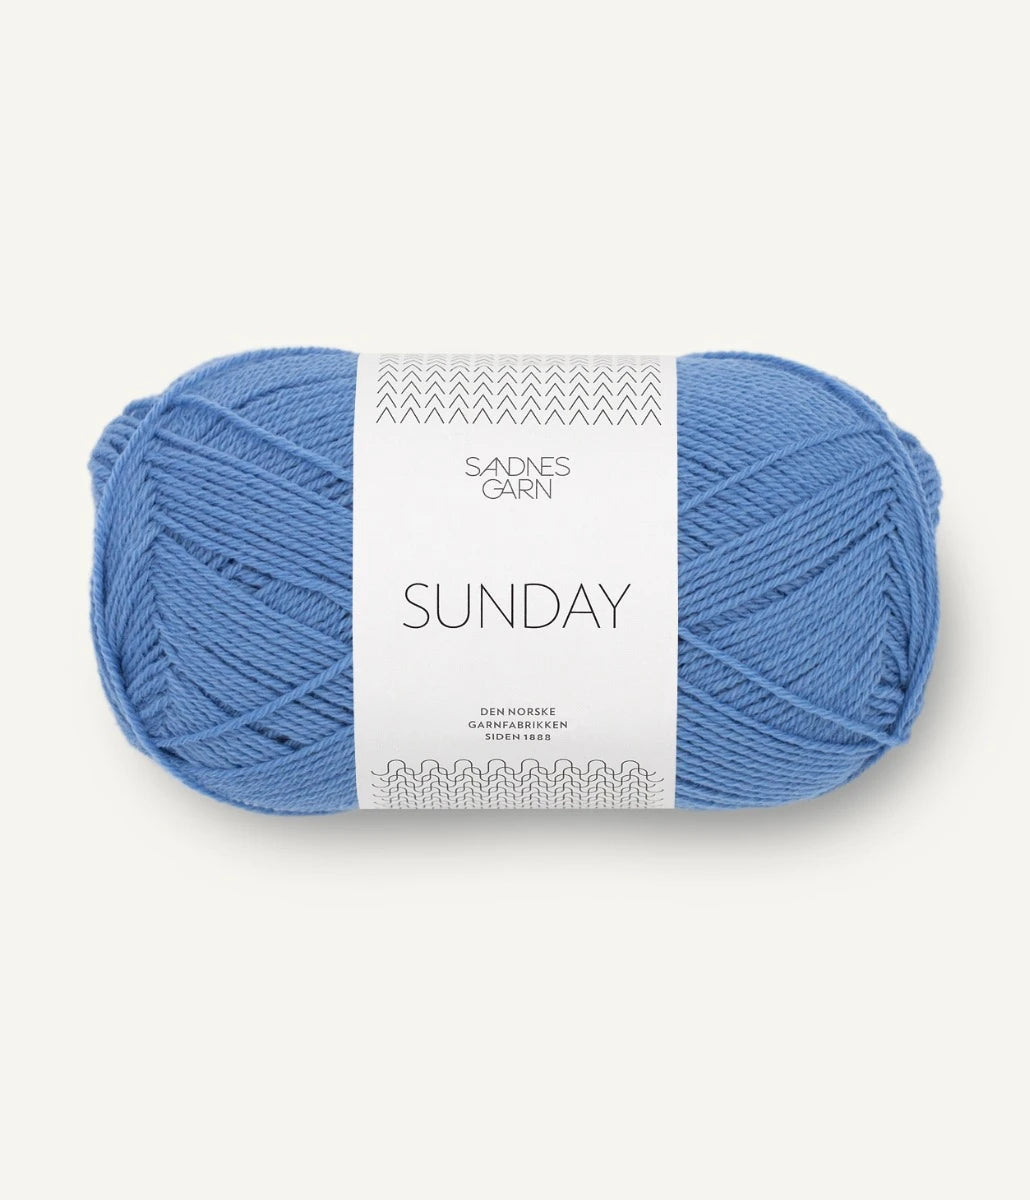 Kuvassa on Sandnes Garn Sunday lanka (yarn) värissä Regatta Blå.